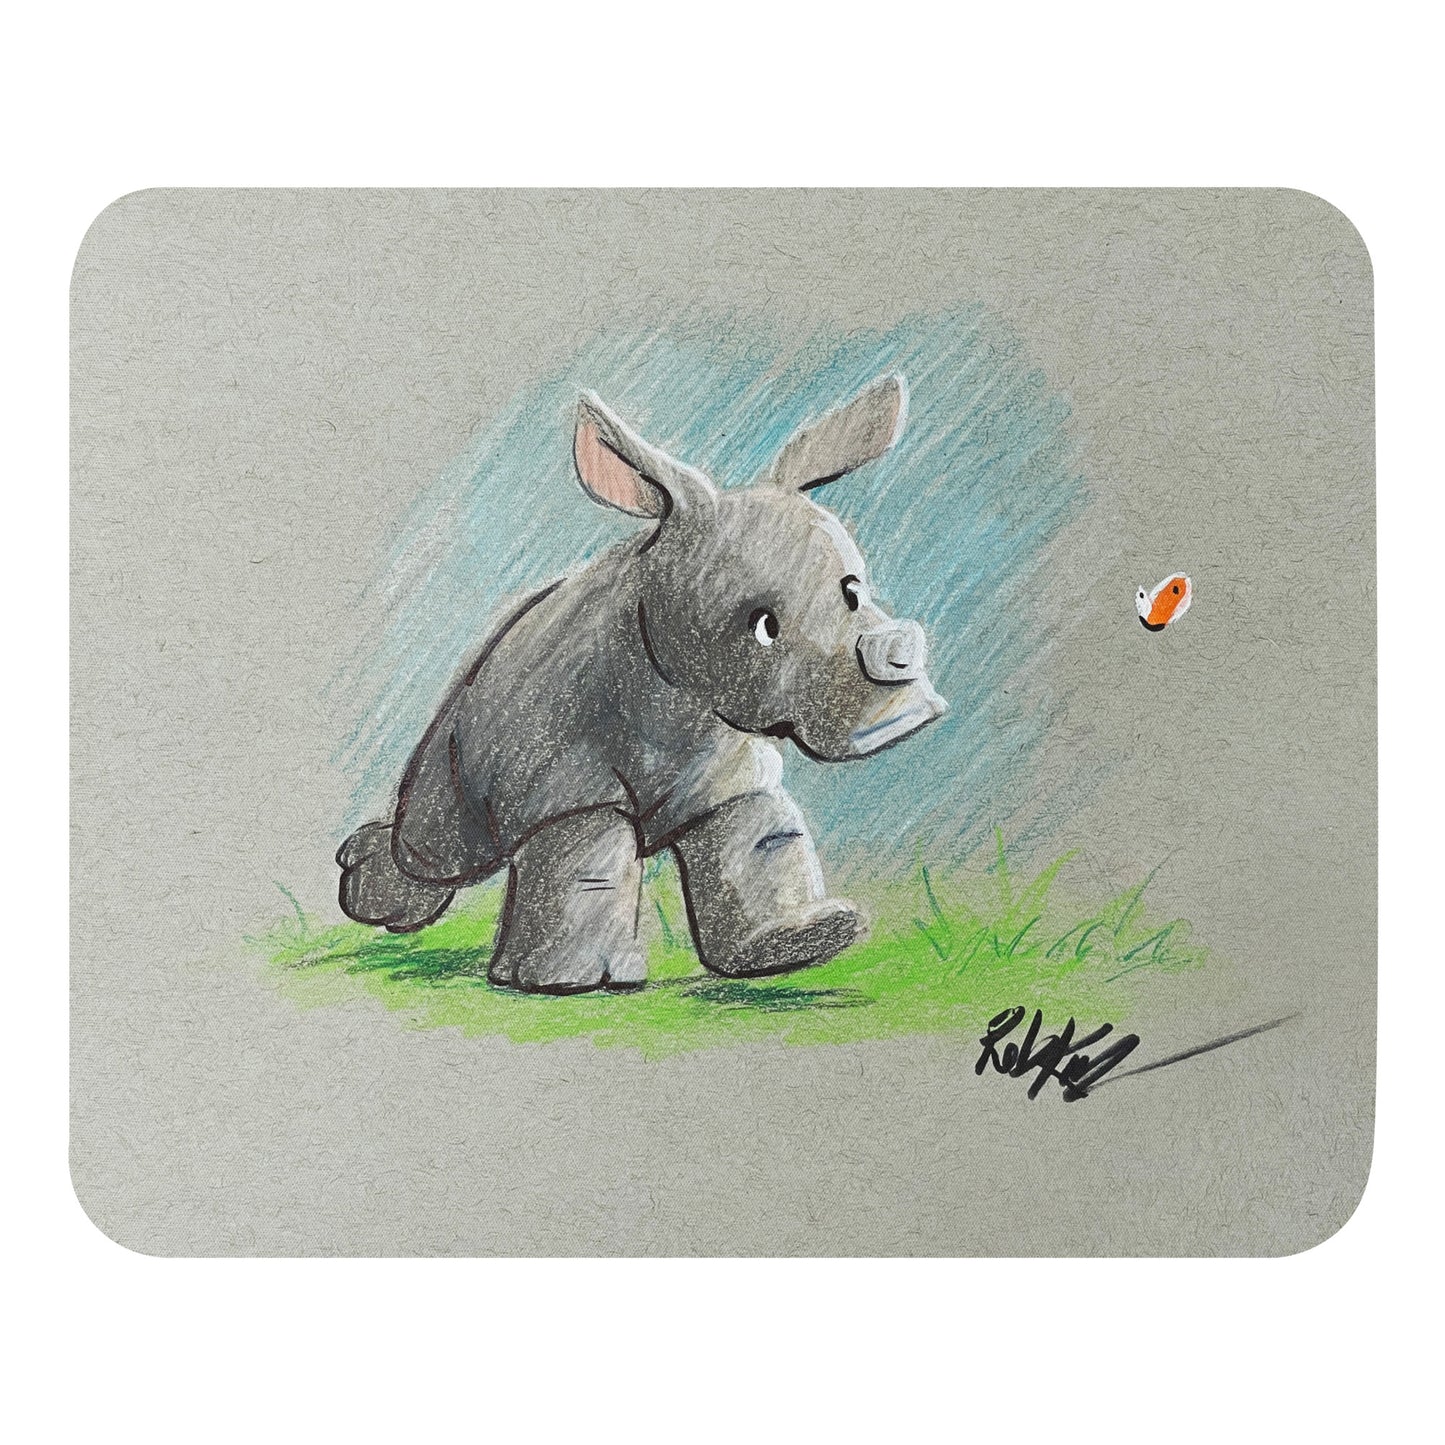 Mousepad Sketch Series - baby rhino - Rob Kaz